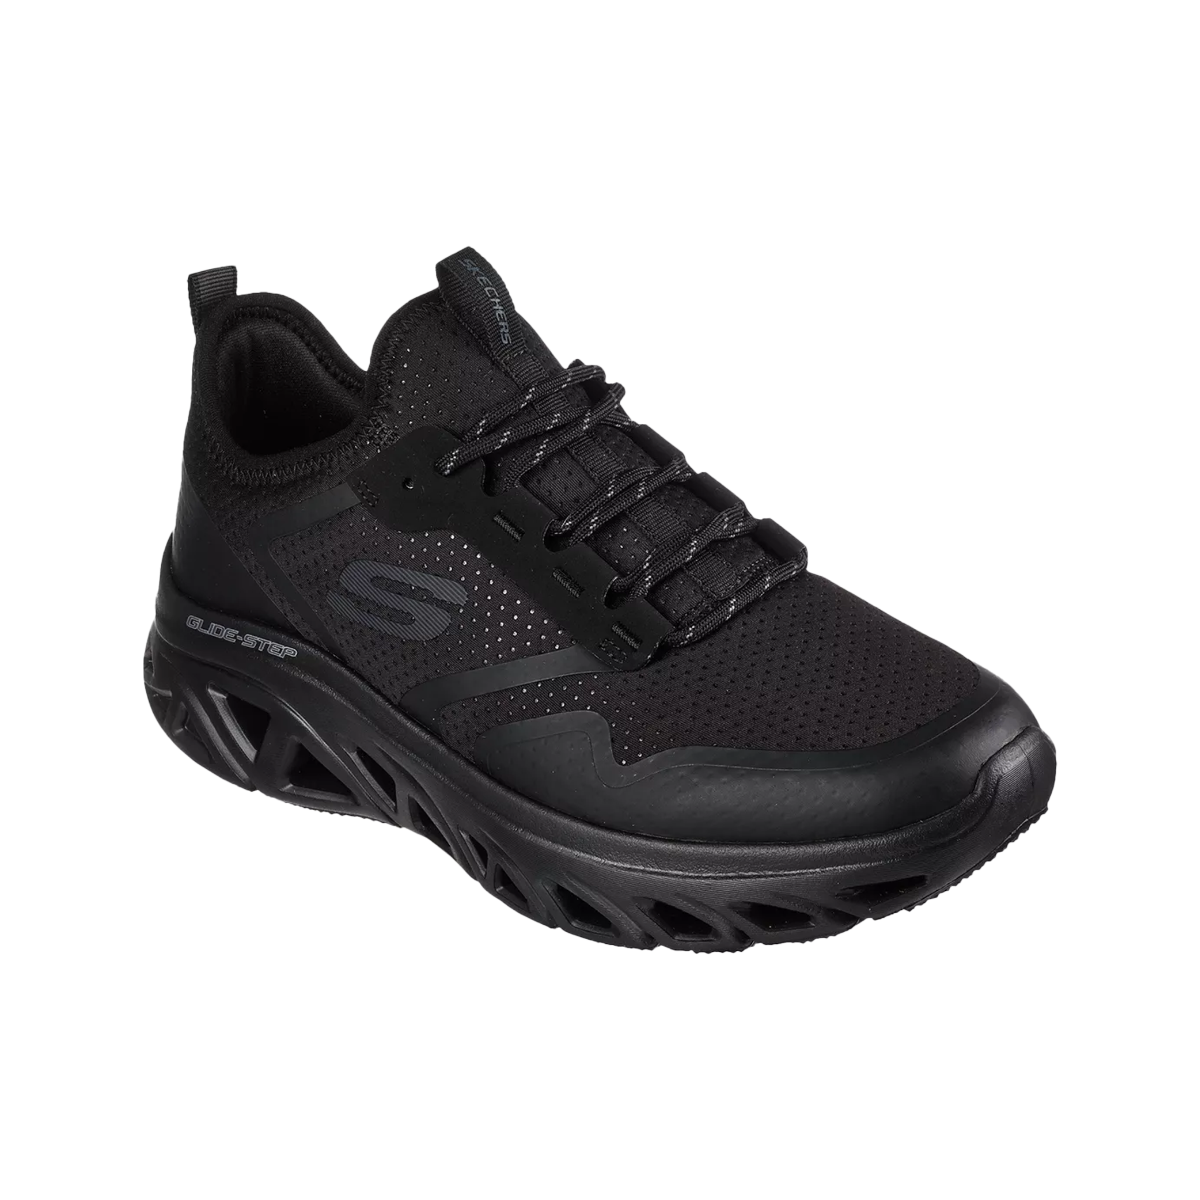 Skechers Glide Step Sports Shoes For Men, Black